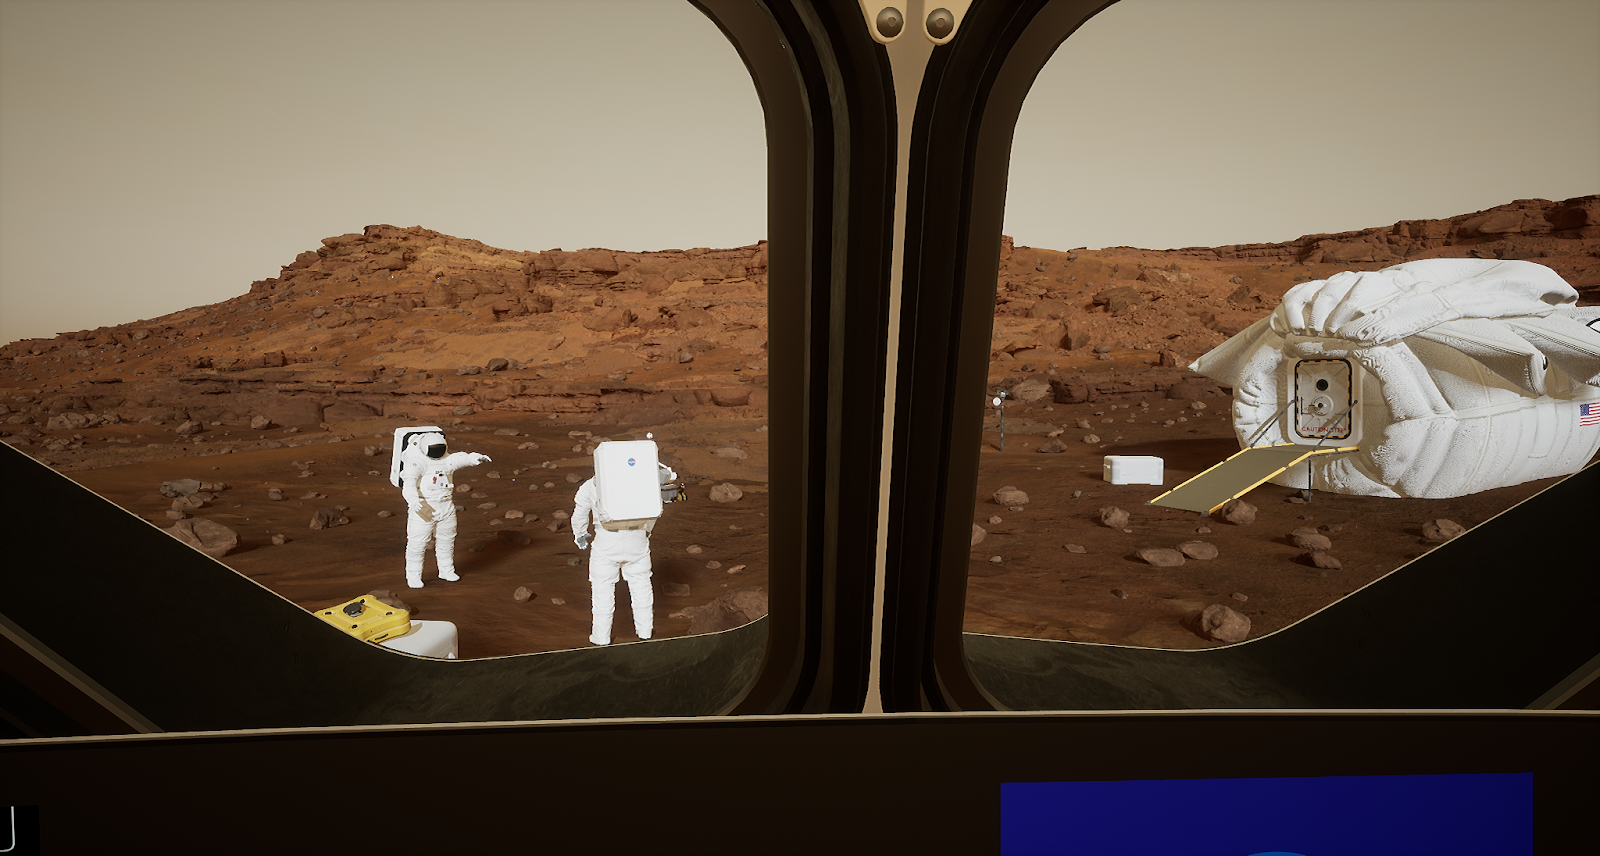 NASA ร่วมมือ EPIC Games สร้างภารกิจจำลองบนดาวอังคารด้วยระบบ VR